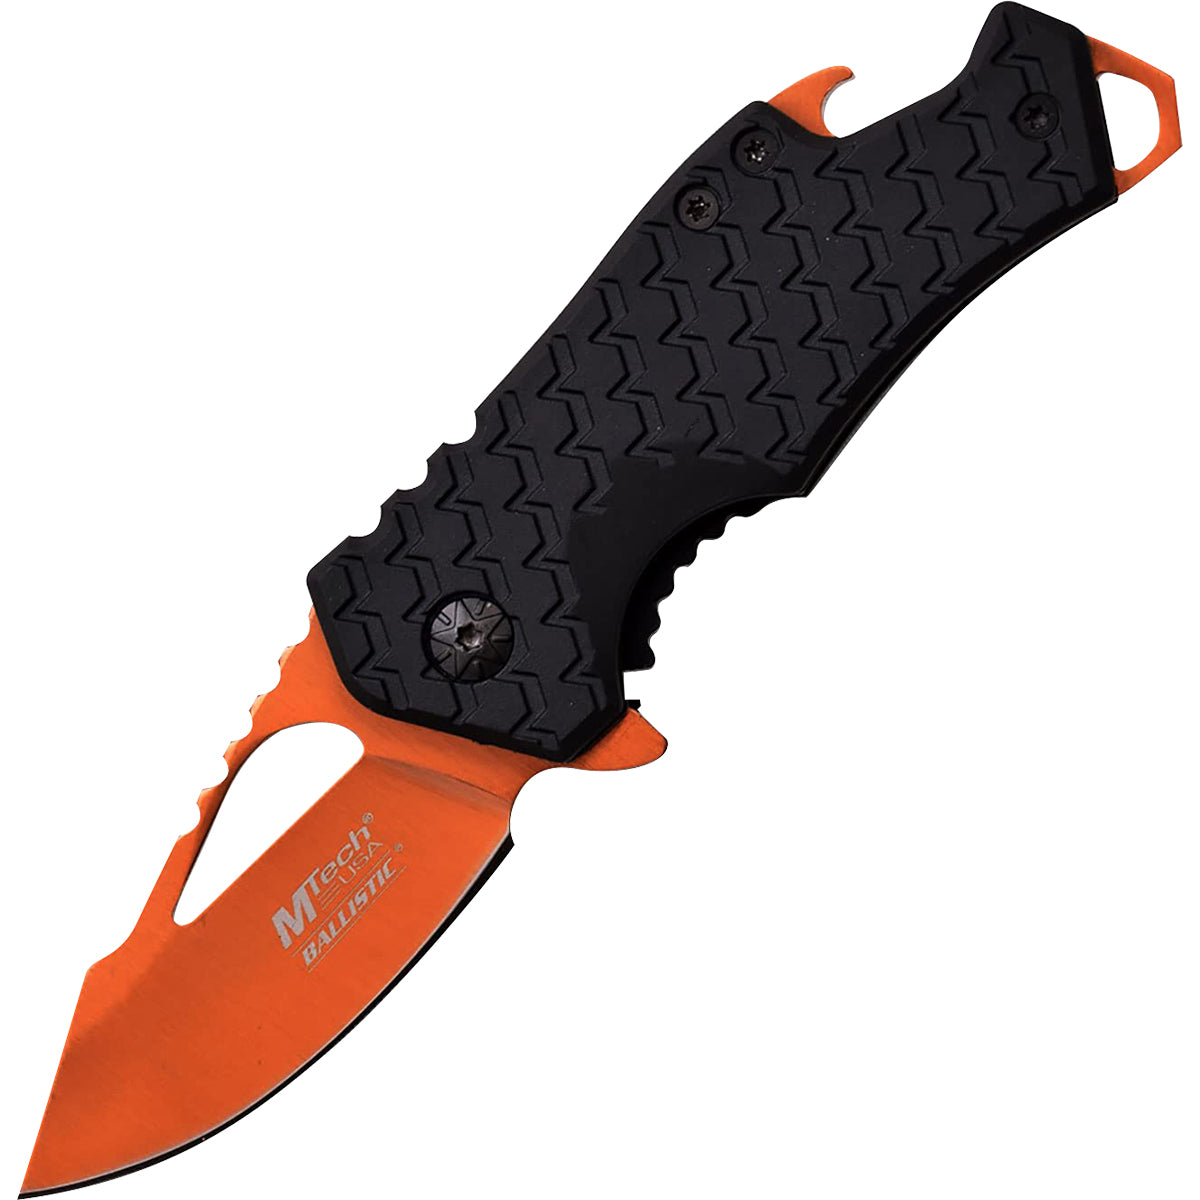 MTech USA Framelock Spring Assisted Folding Knife, 2.25" Orange Blade, MT-A882OR M-Tech